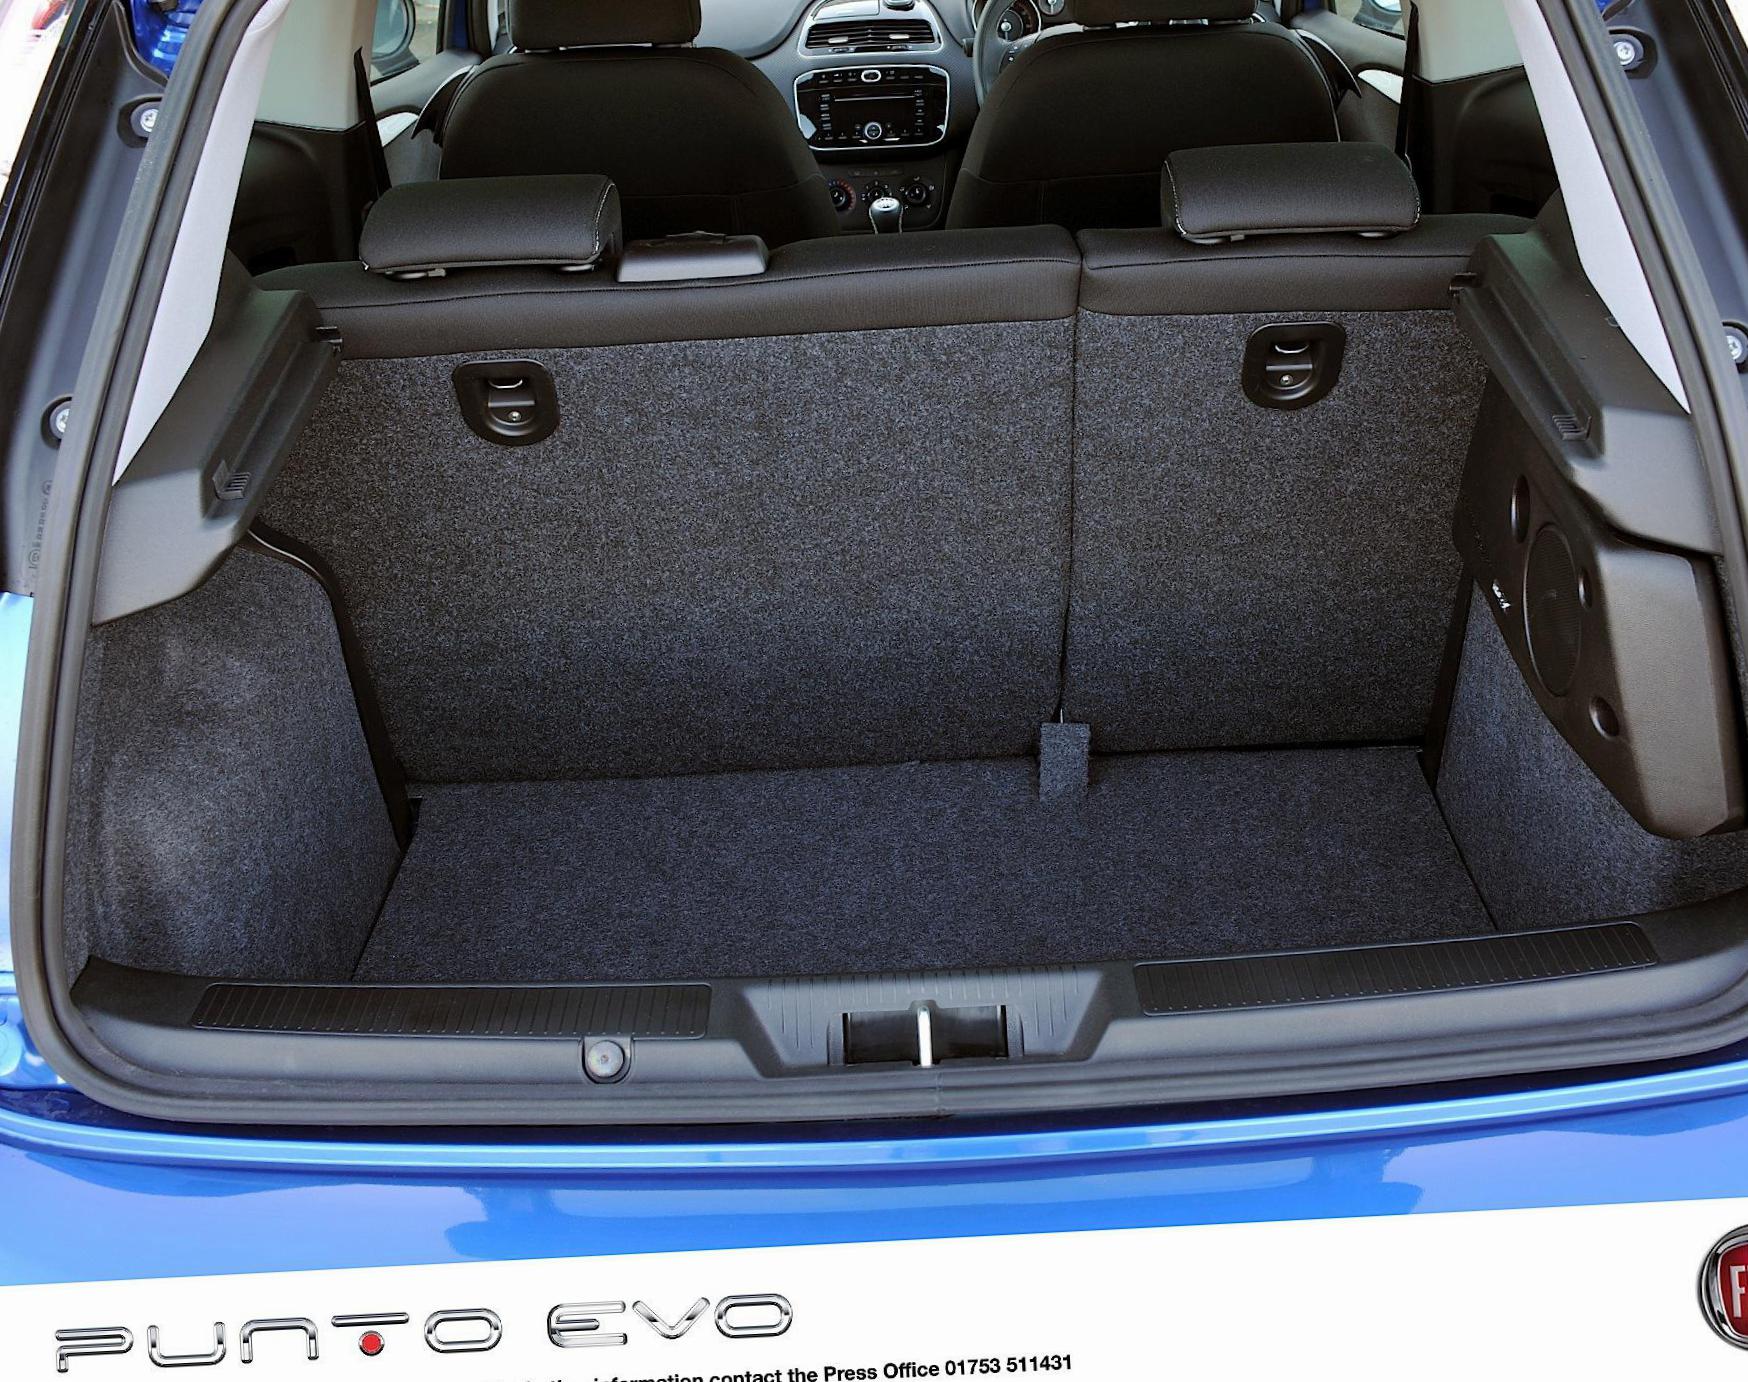 Punto Evo 3 doors Fiat models hatchback